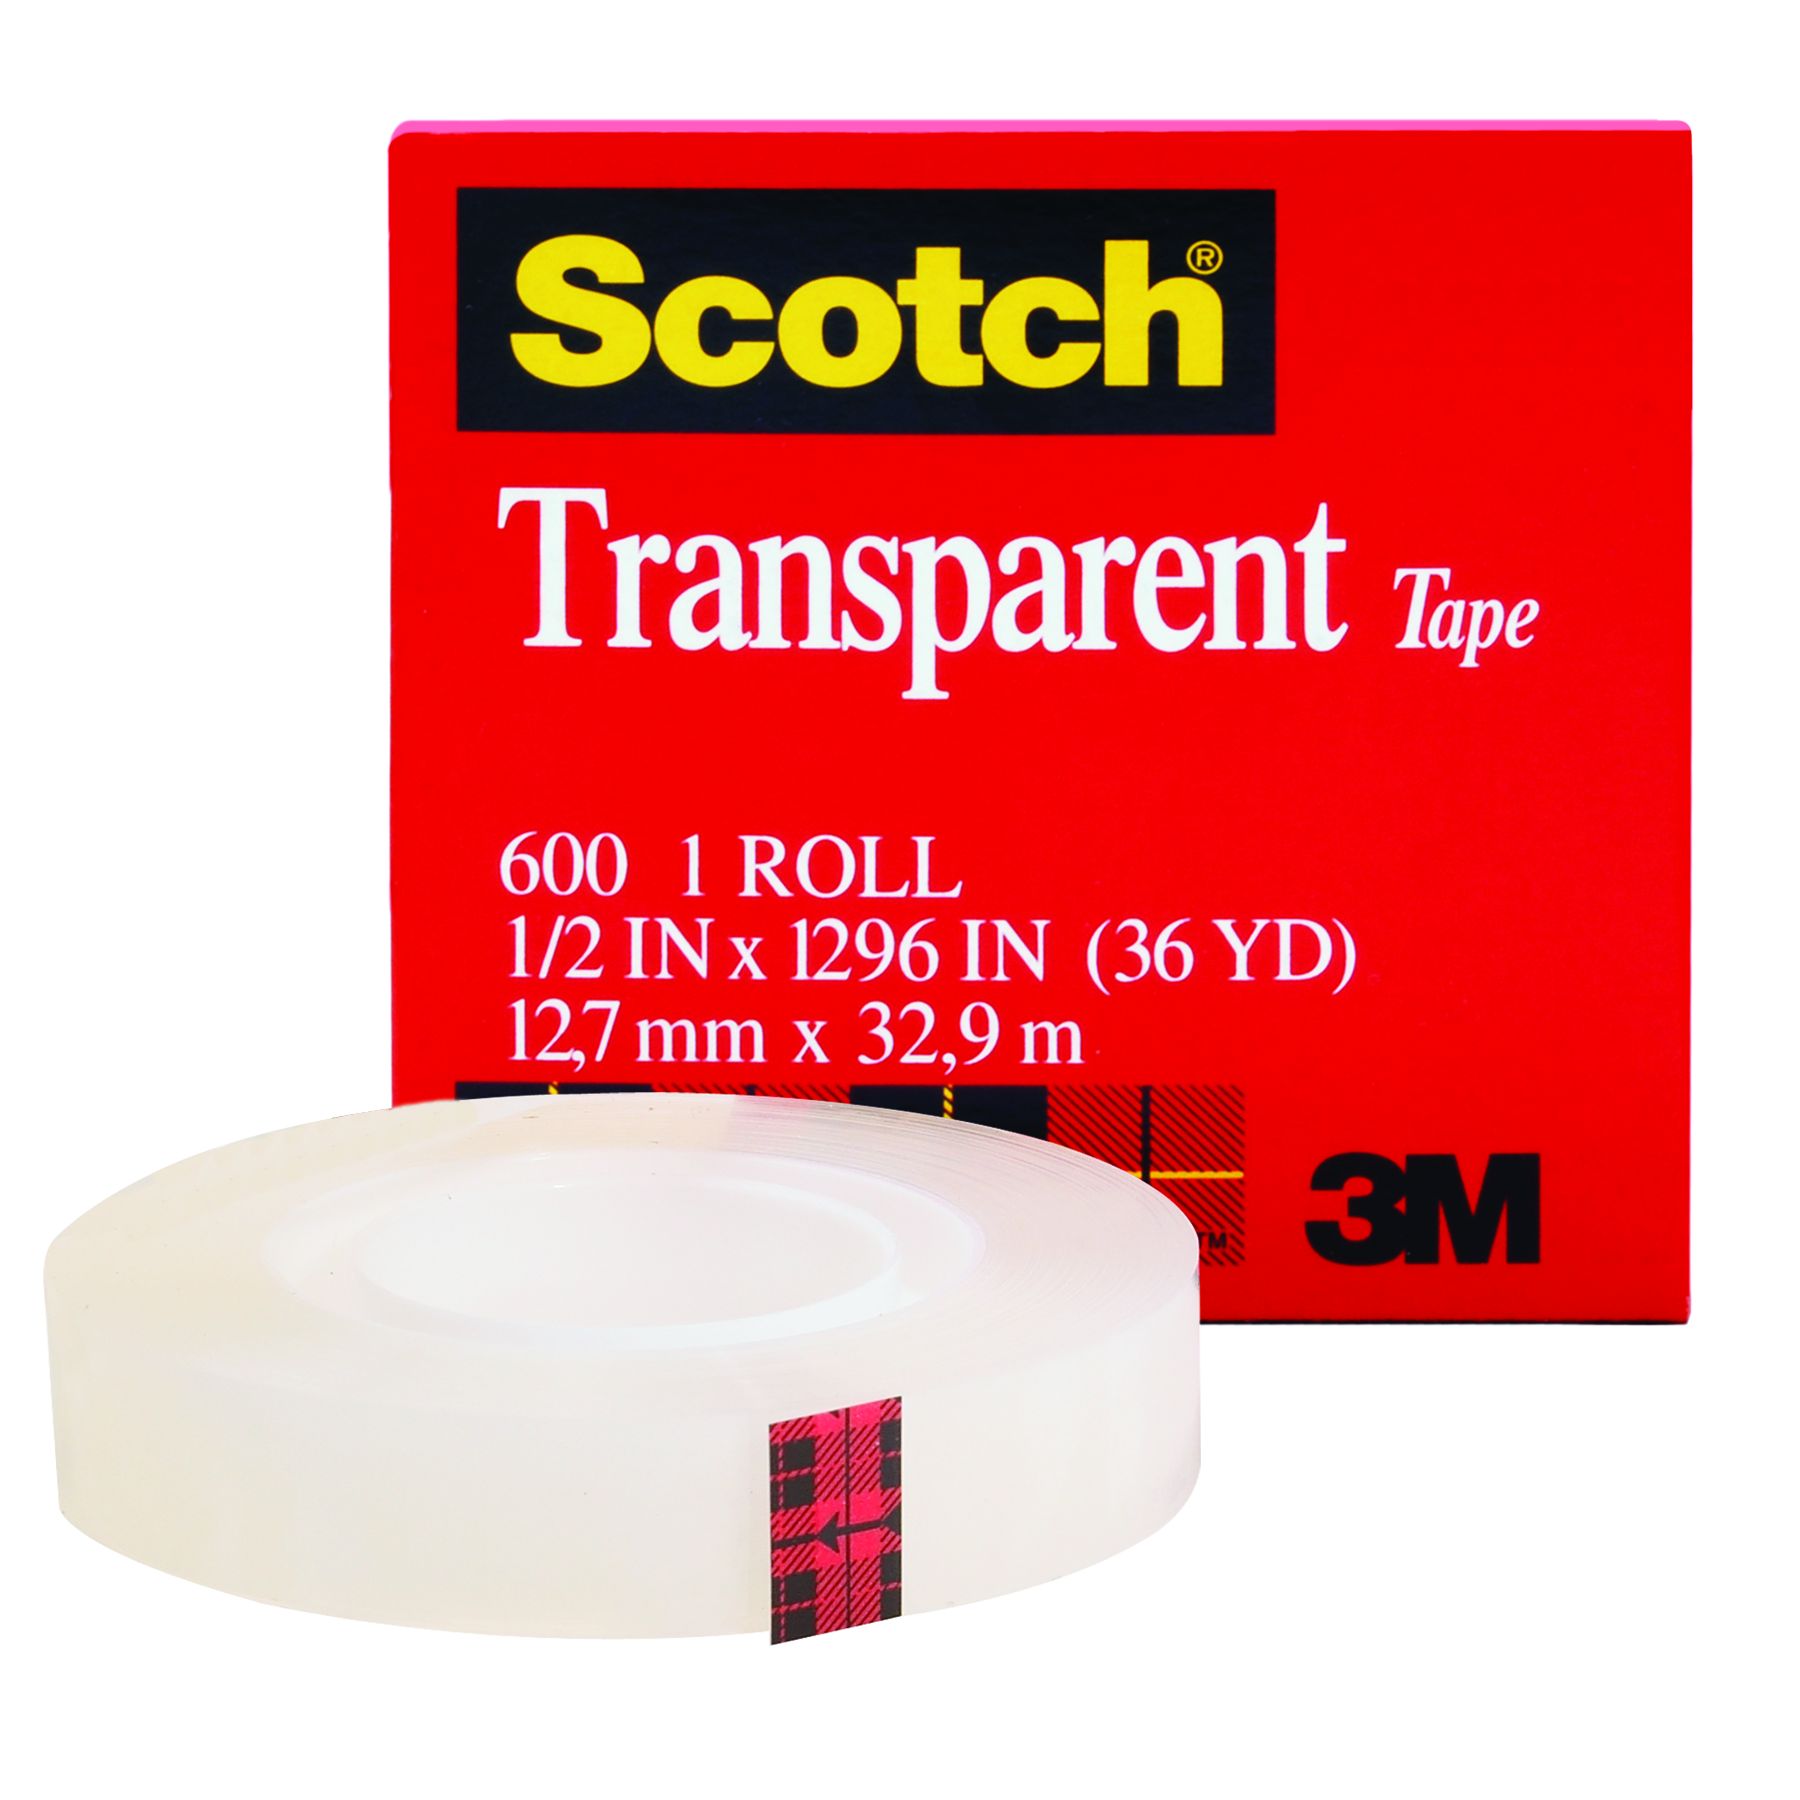 Scotch Transparent Tape 600 x 1/2 Roll Lot of 3 